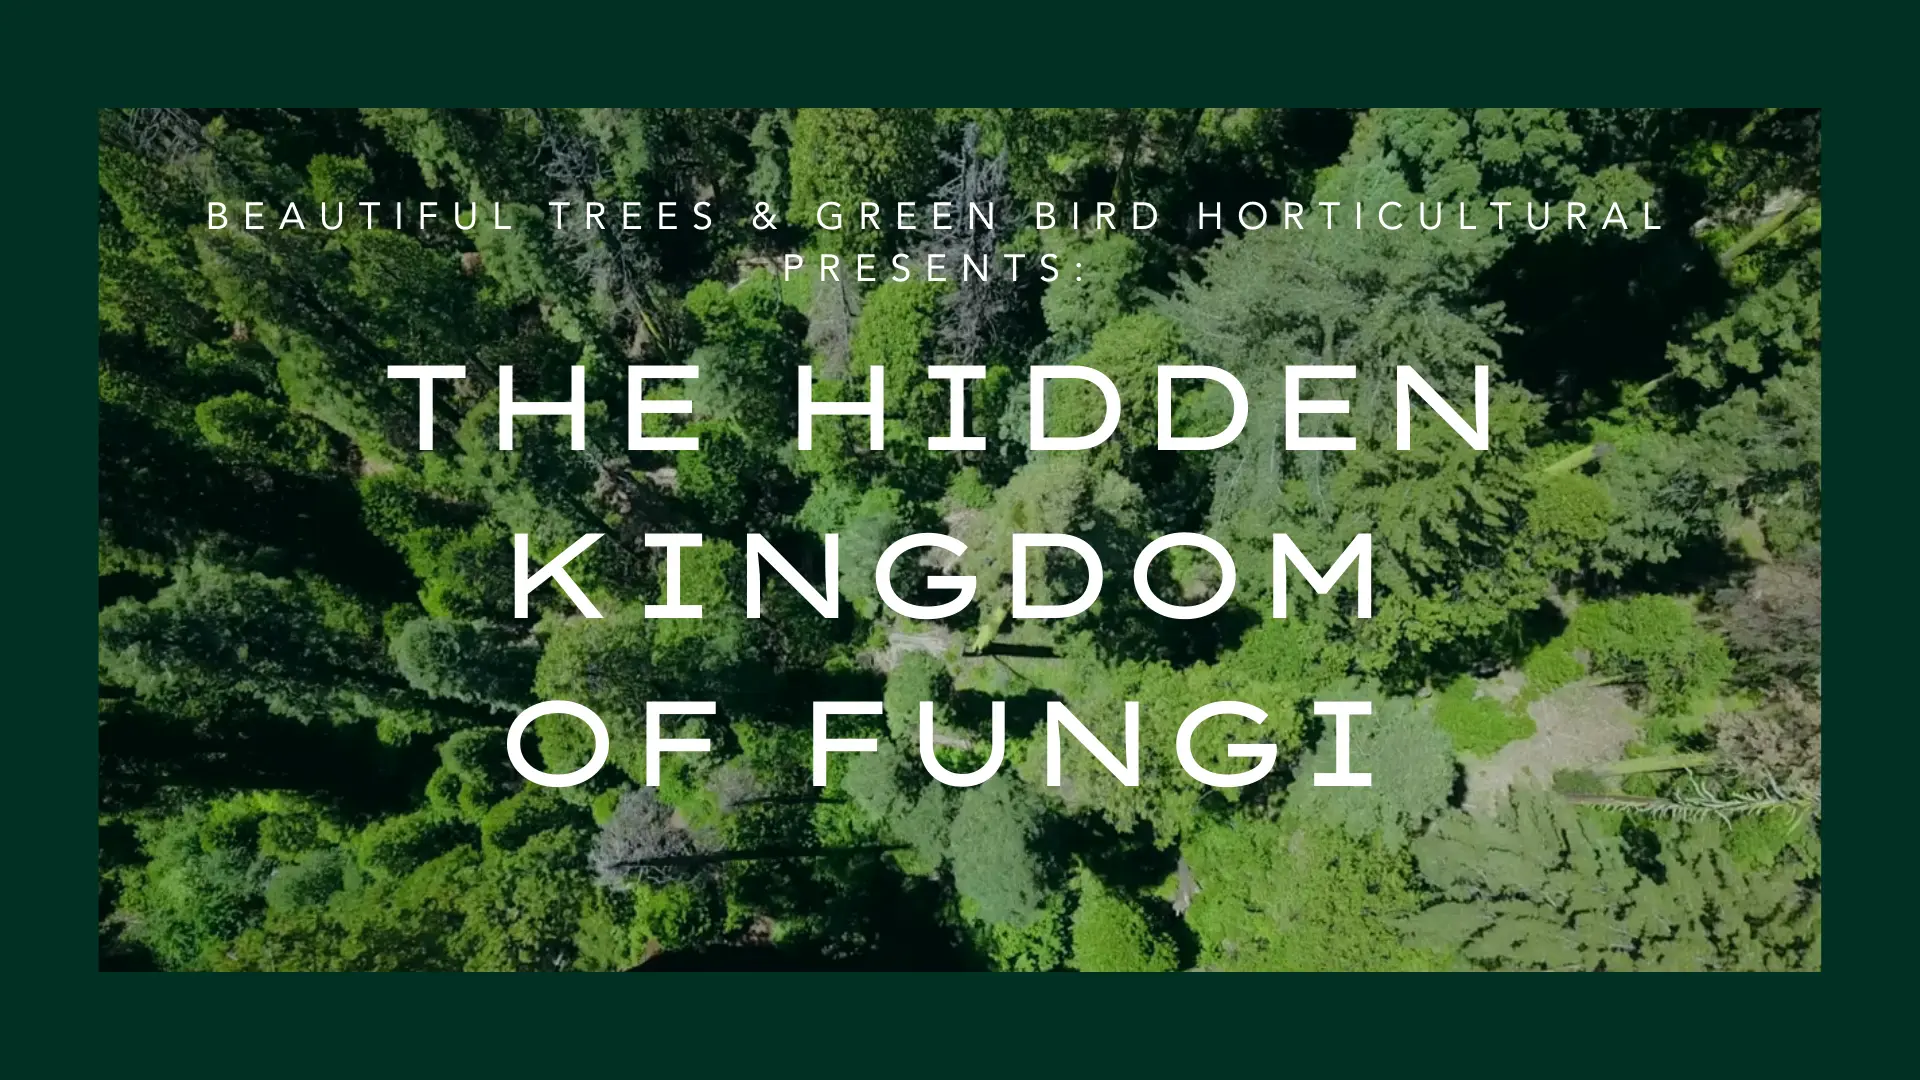 The Hidden Kingdom of Fungi